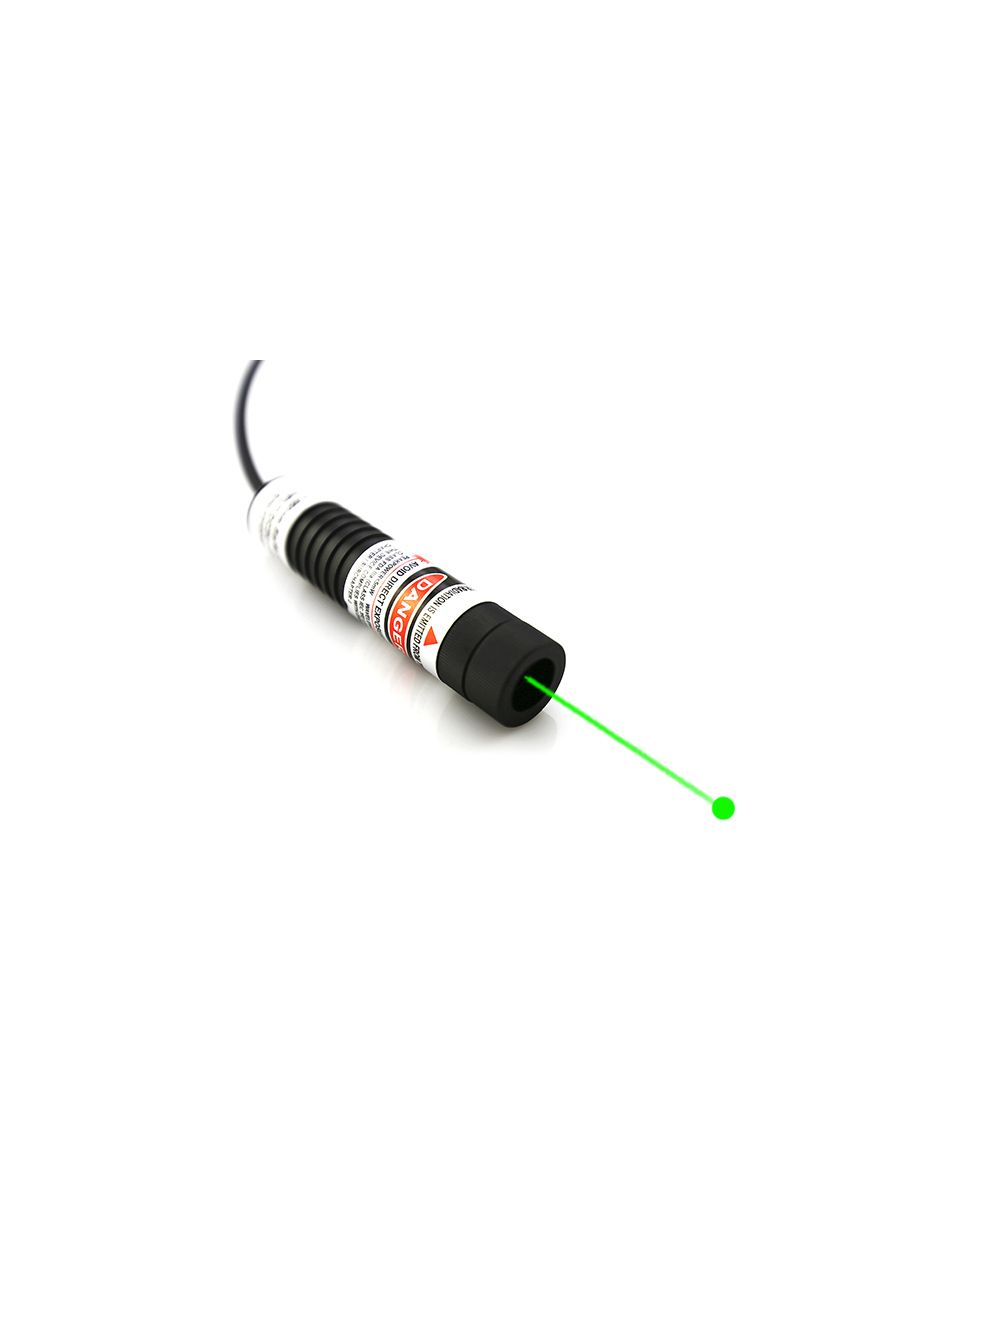 Le laser vert aura bientôt sa diode